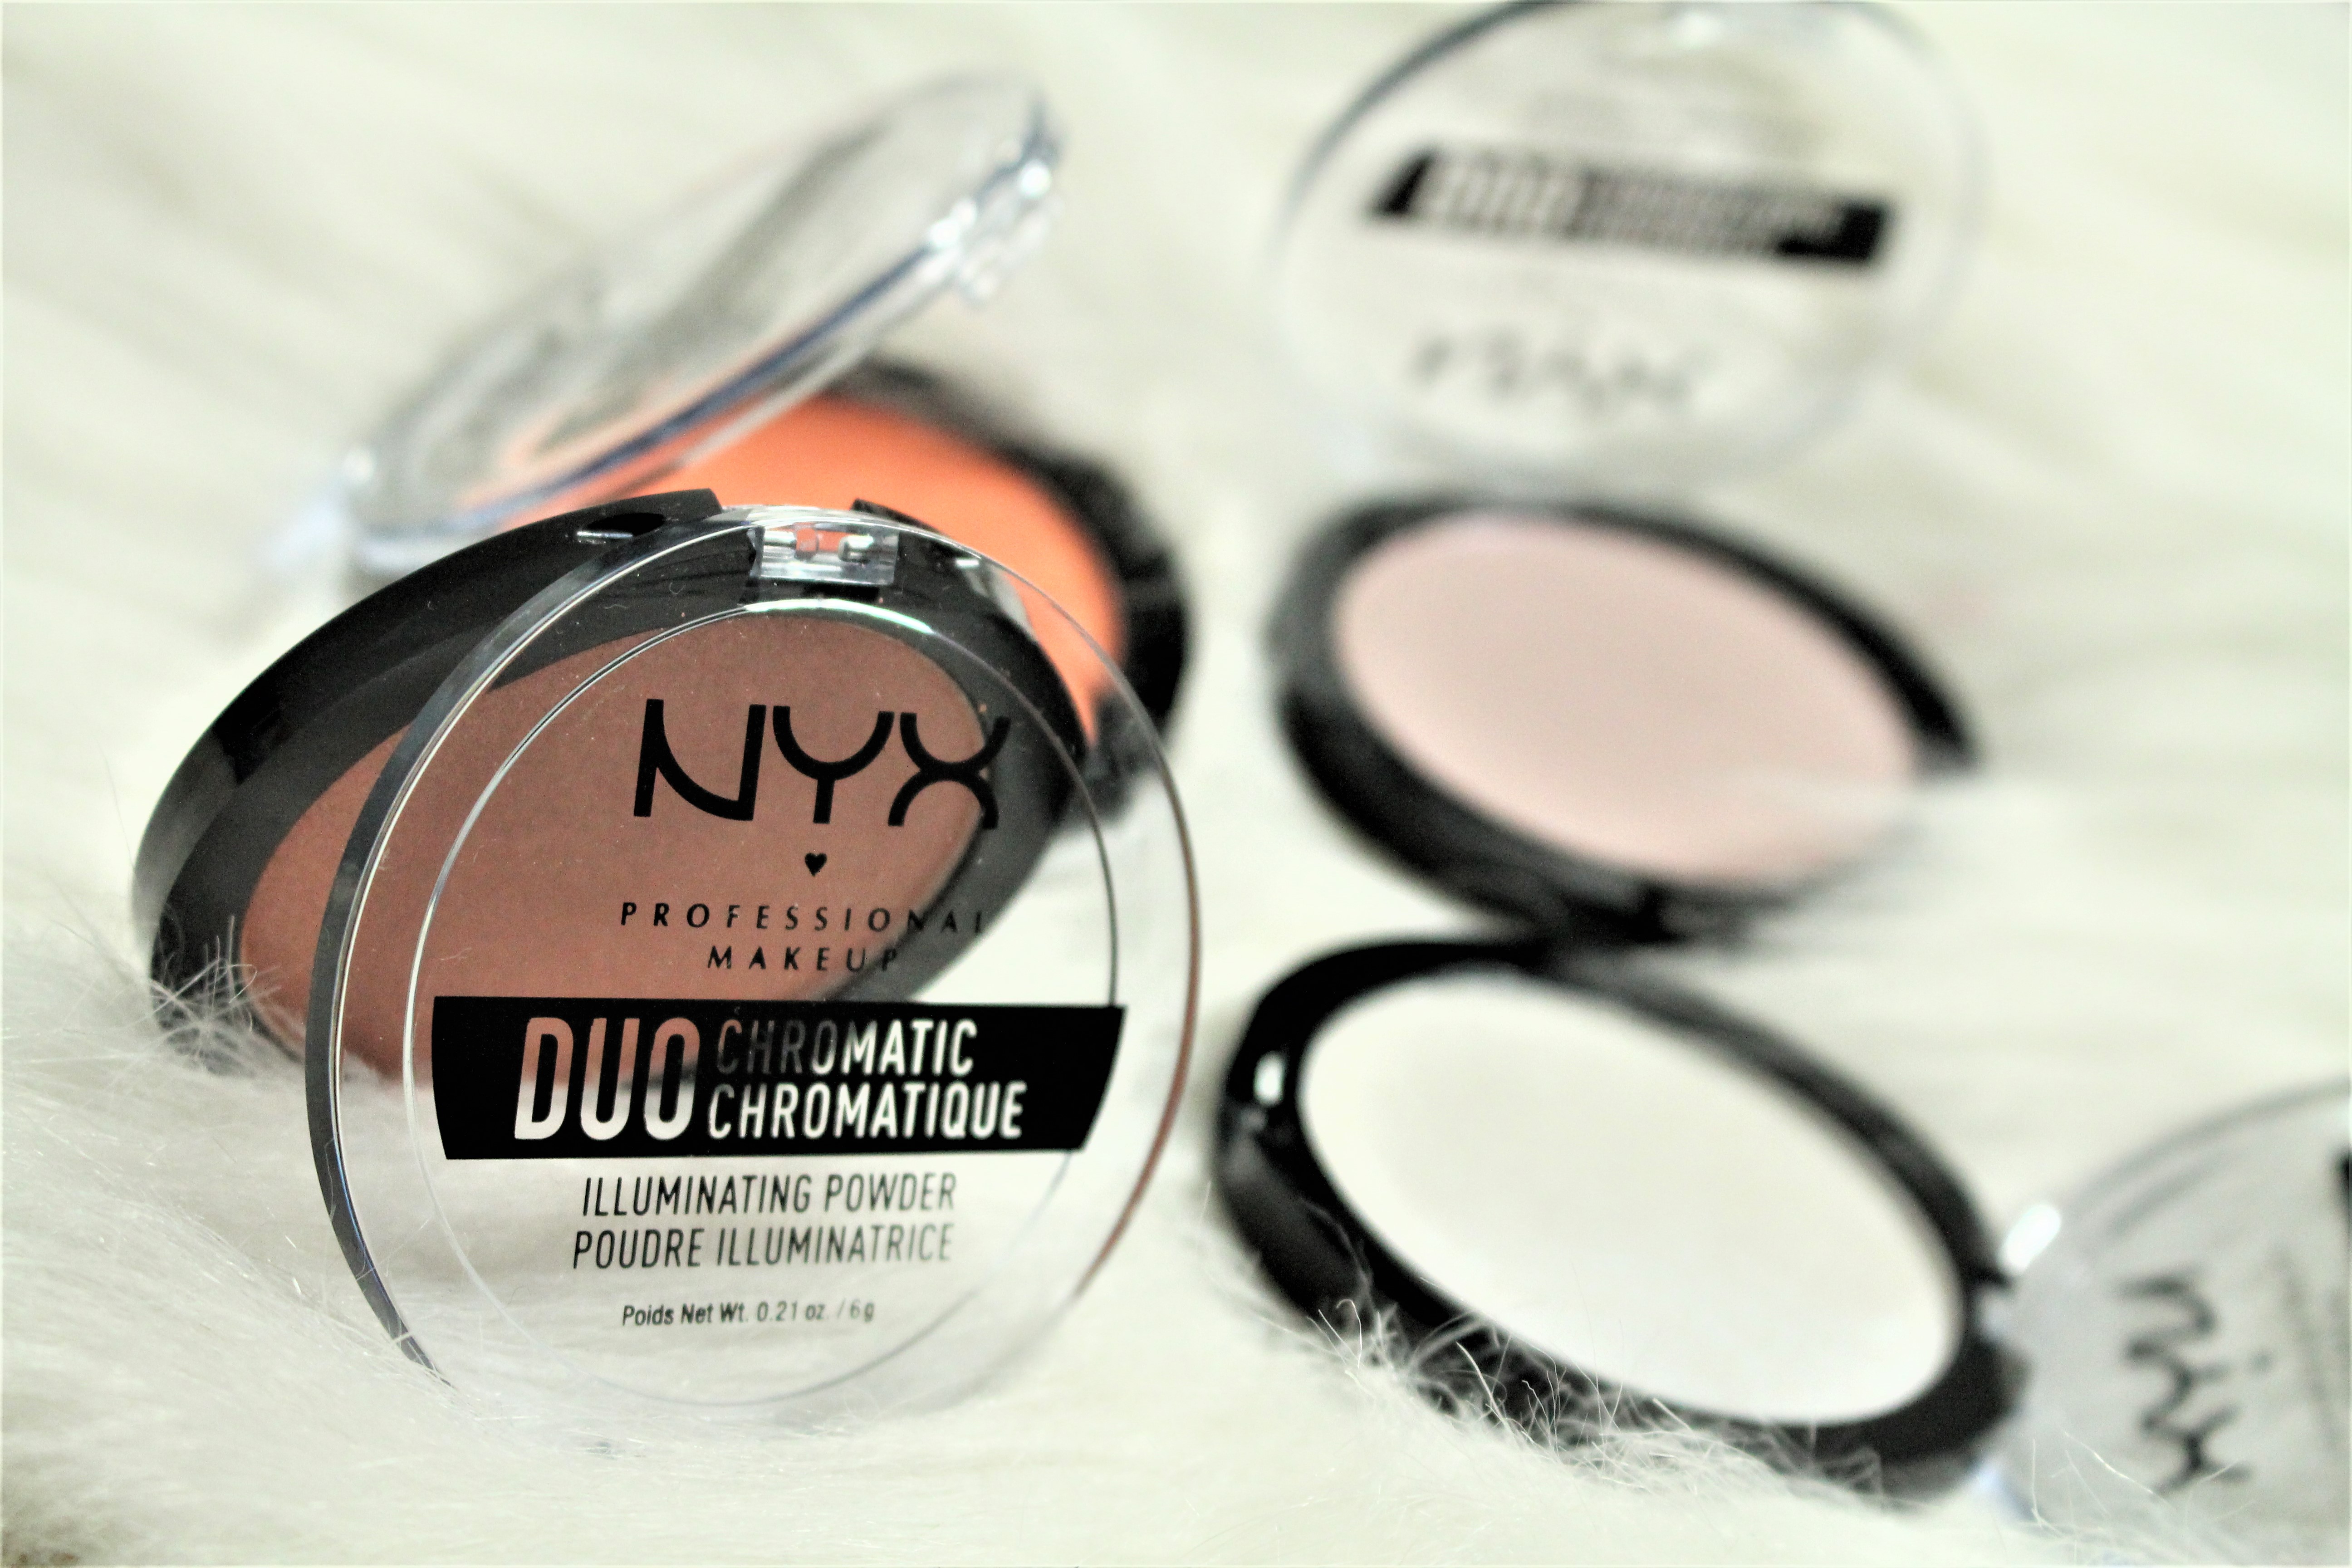 NYX cosmetics duo chromatic illuminating powder review